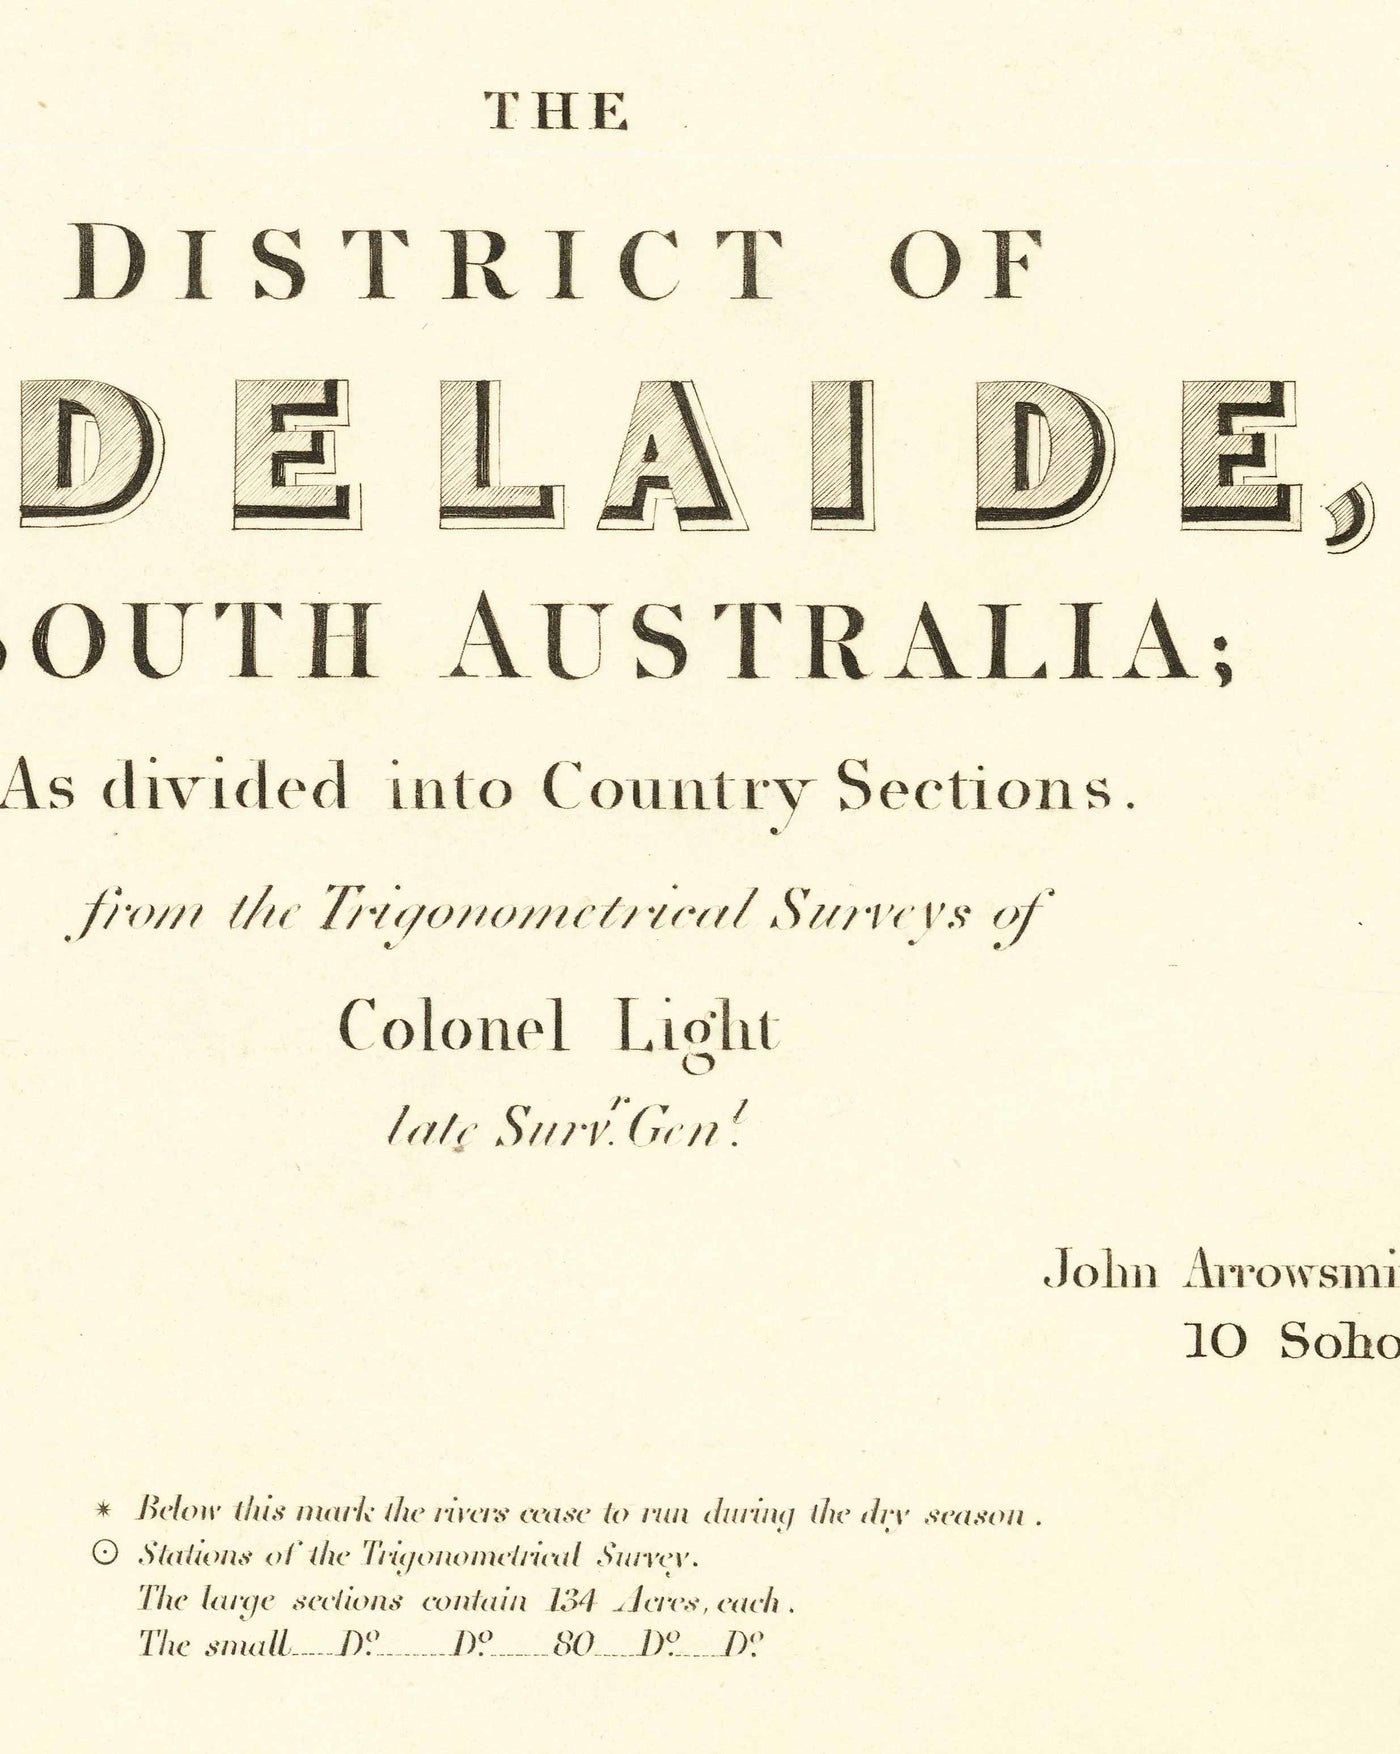 Old Map of Adelaide, South Australia by John Arrowsmith, 1839 - Brighton, Port, Norwood, Glenelg Beach